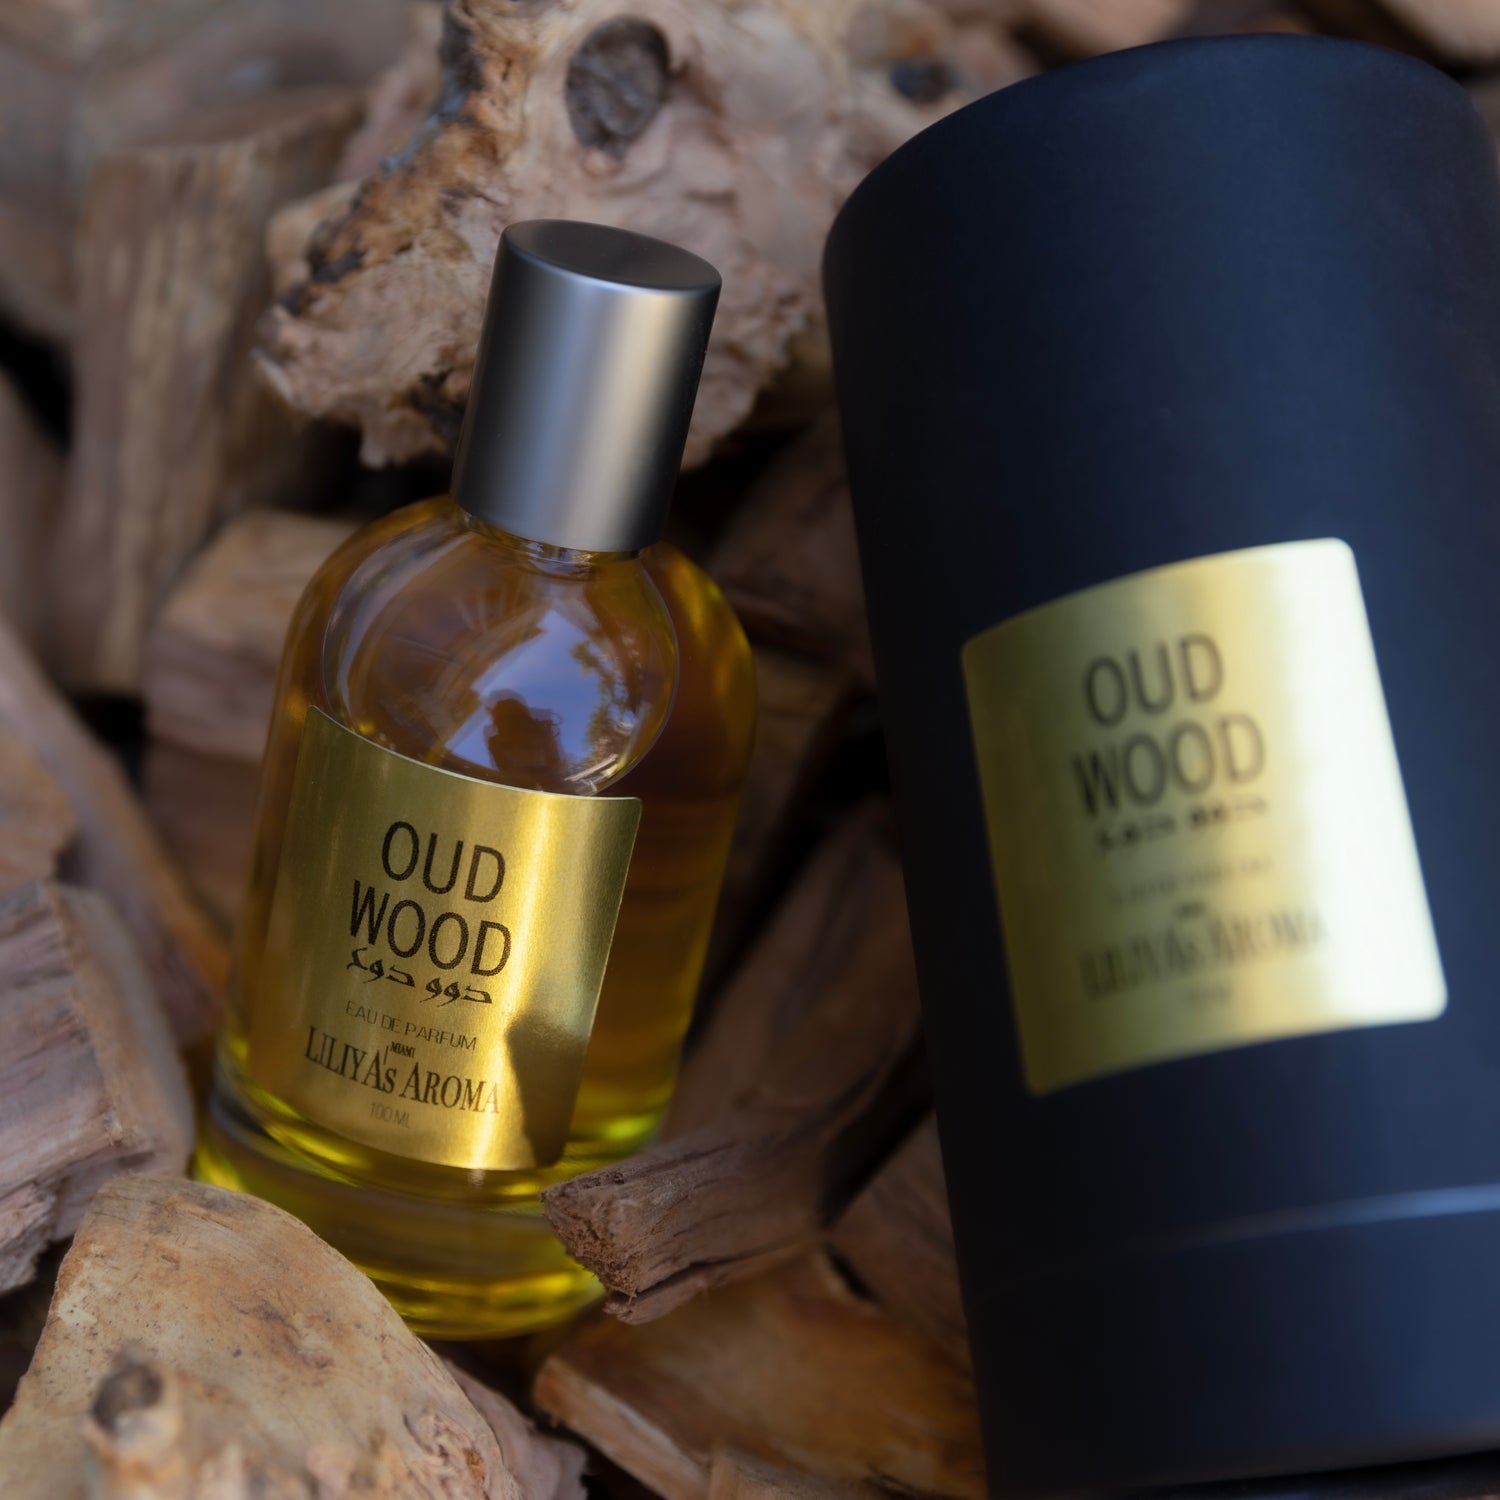  Liliya's Aroma Brazilian Wood Eau de Parfum for Men Tropical  Woody Scent, Oriental Fragrance with Sandalwood 3.3 Fl Oz (Brazilian Wood)  : Beauty & Personal Care